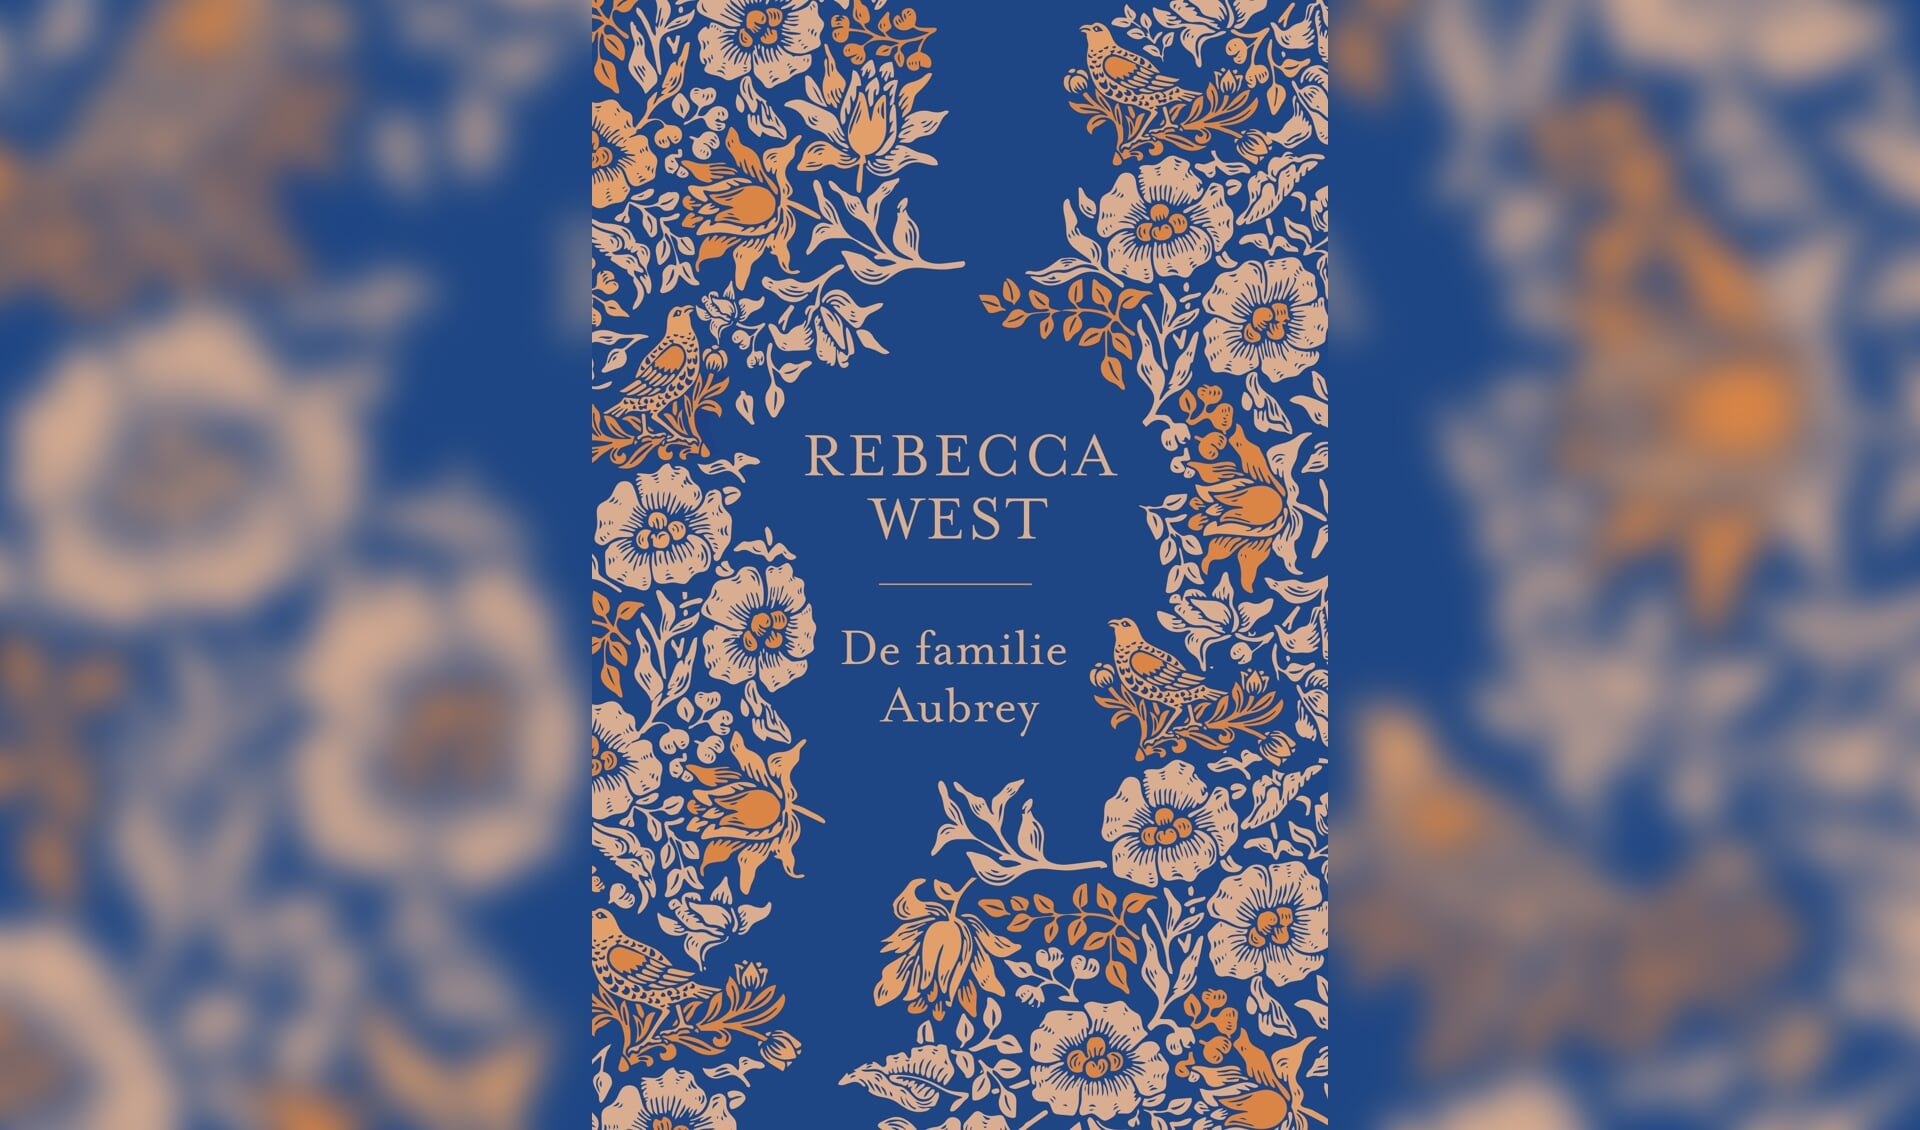 Boek Rebecca West – Familie Aubrey